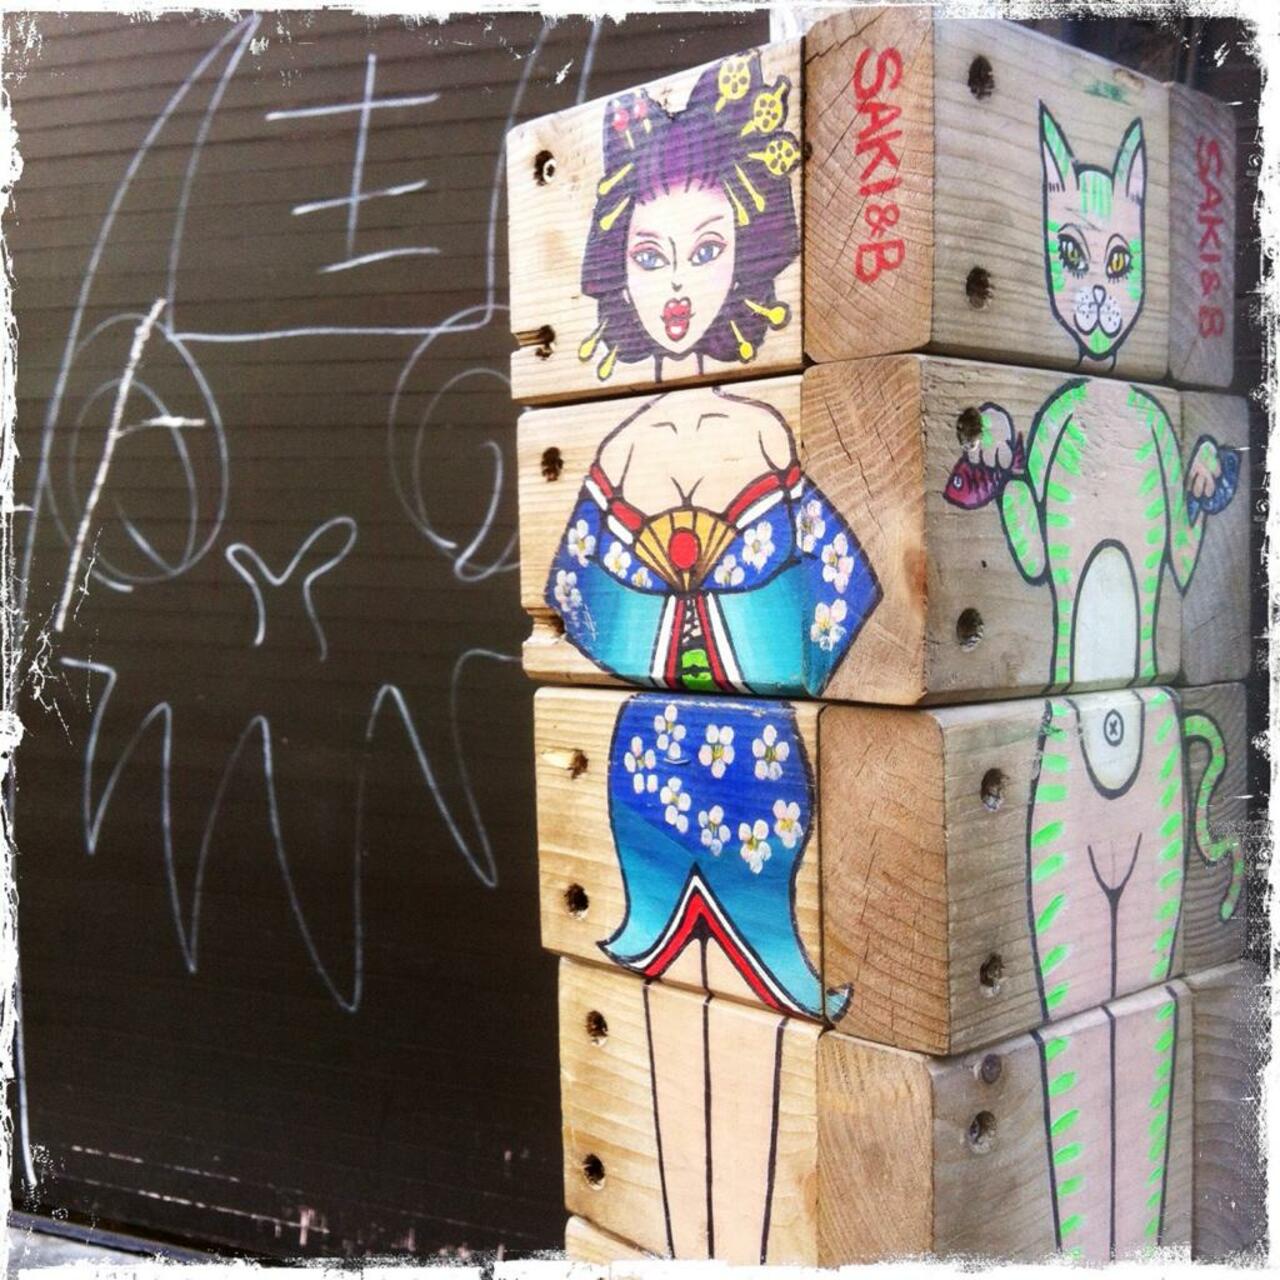 RT @BrickLaneArt: Works on Bacon Street by @sakiandbitches & @HIMBAD_ #art #streetart #graffiti http://t.co/JUqhrZDv1B